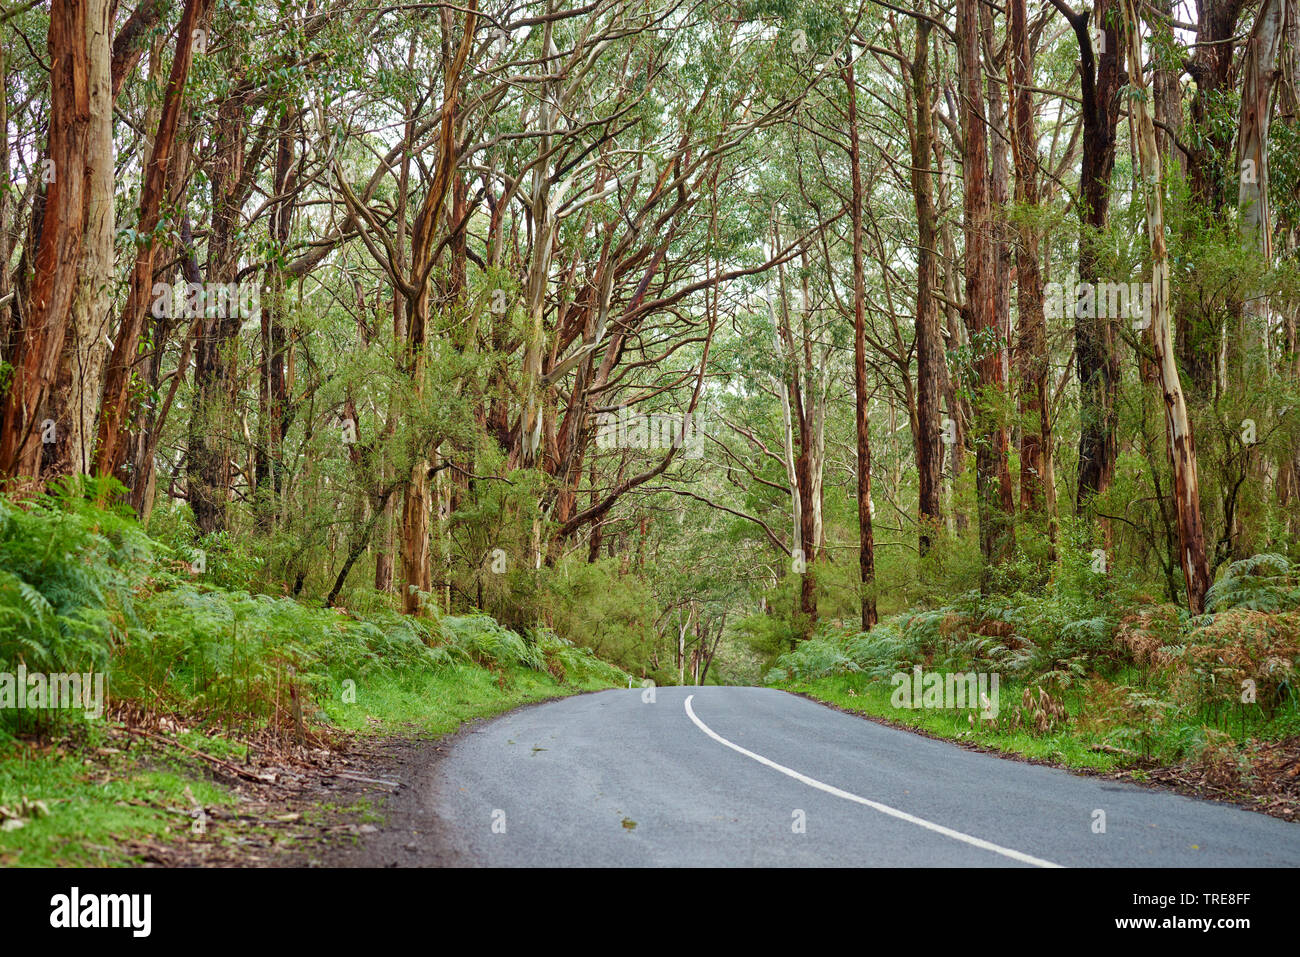 El eucalipto, gum (Eucalipto spec.), a través de una carretera gum tree bosque en primavera, de Australia, Victoria, el Parque Nacional Gran Otway Foto de stock